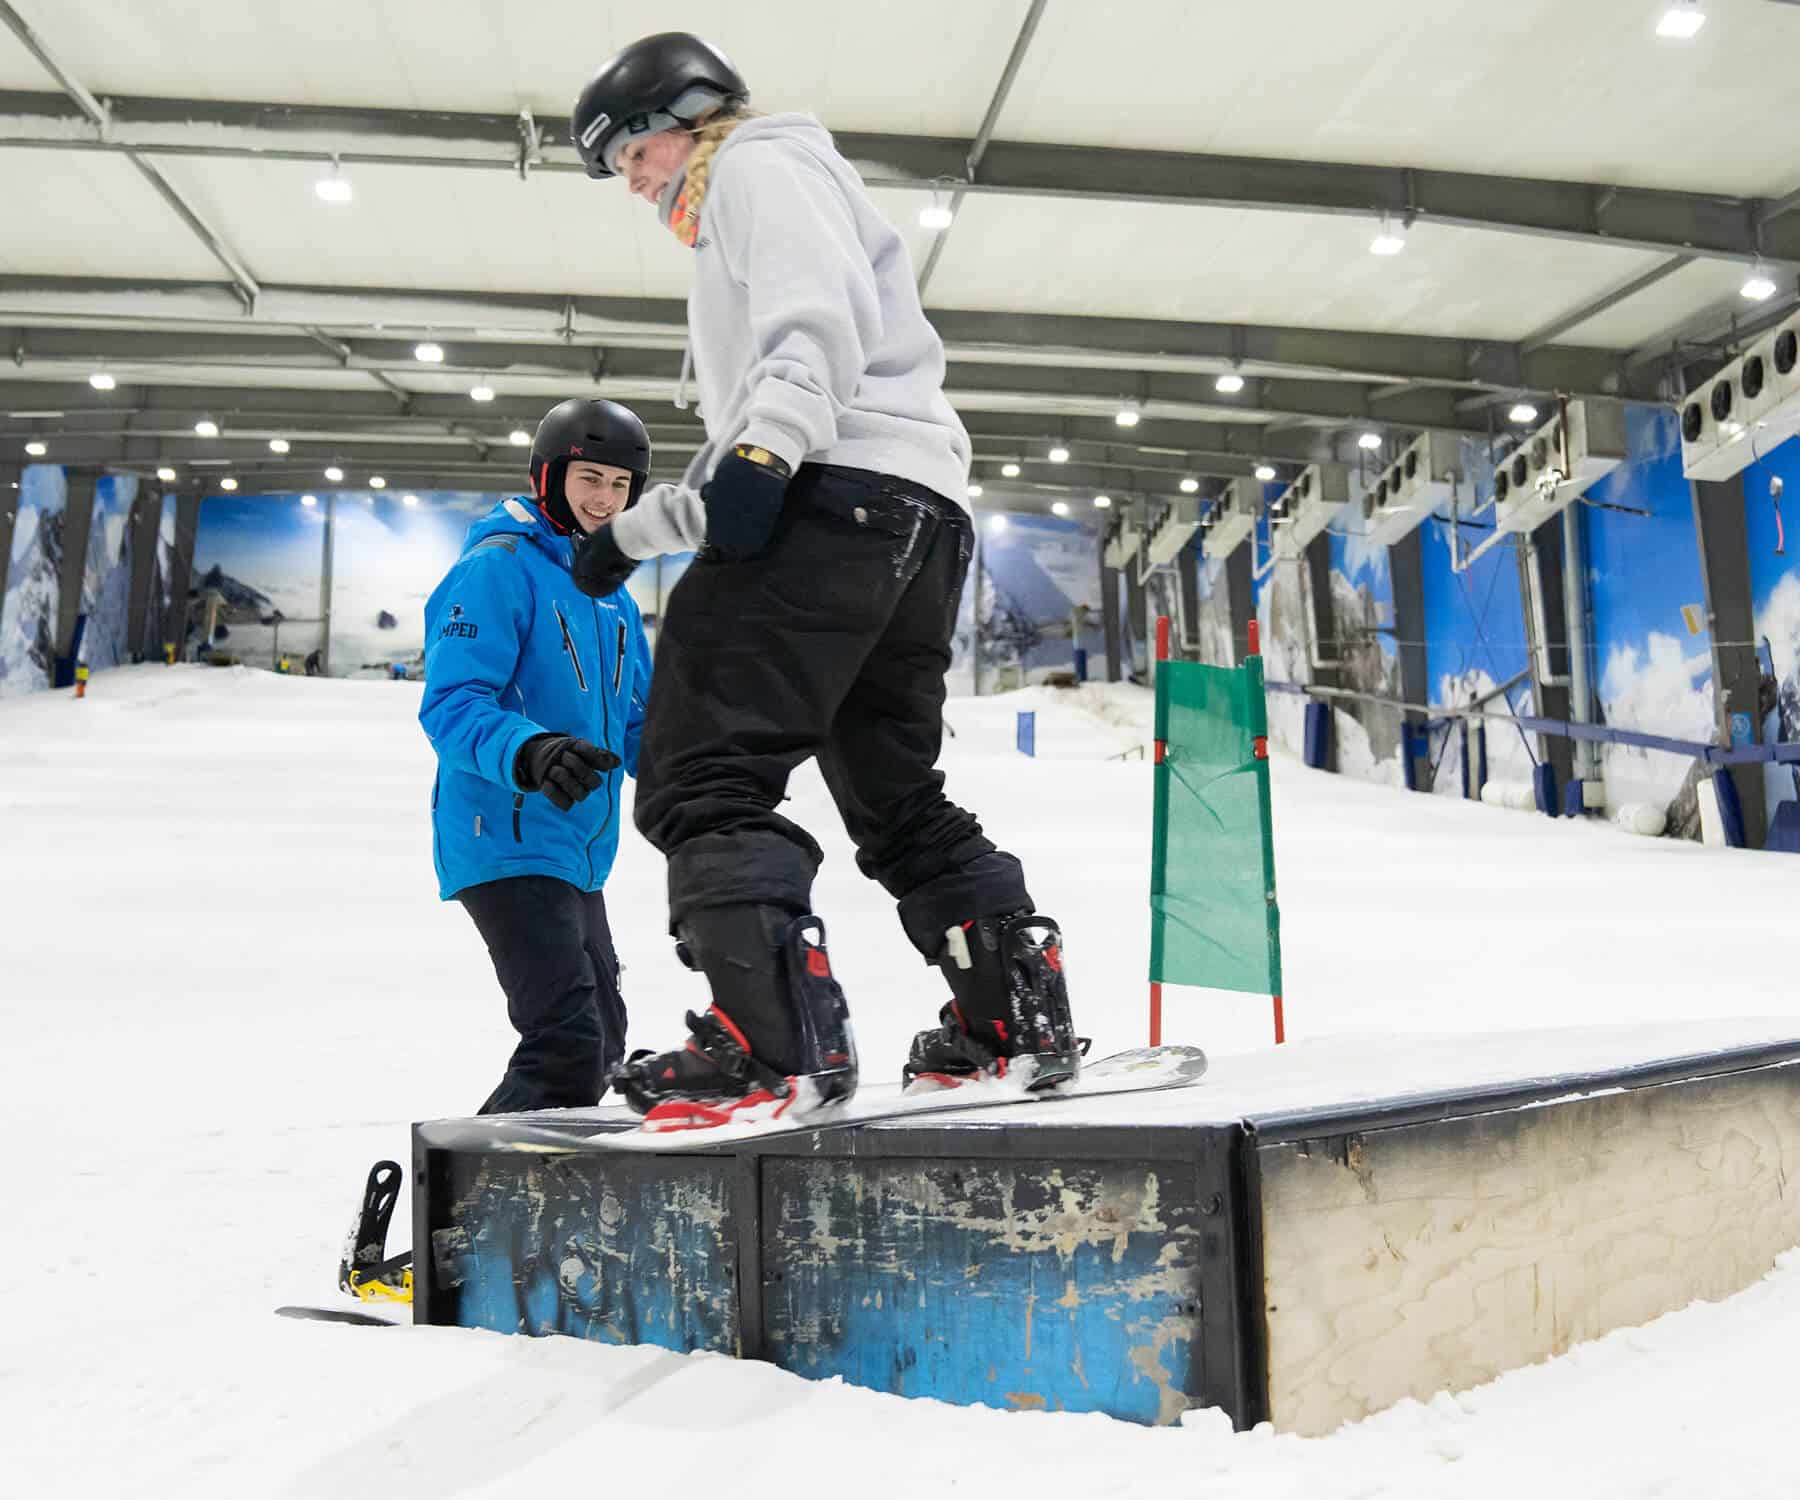 Snowboarder's private lesson on Snowplanet's Terrain Park